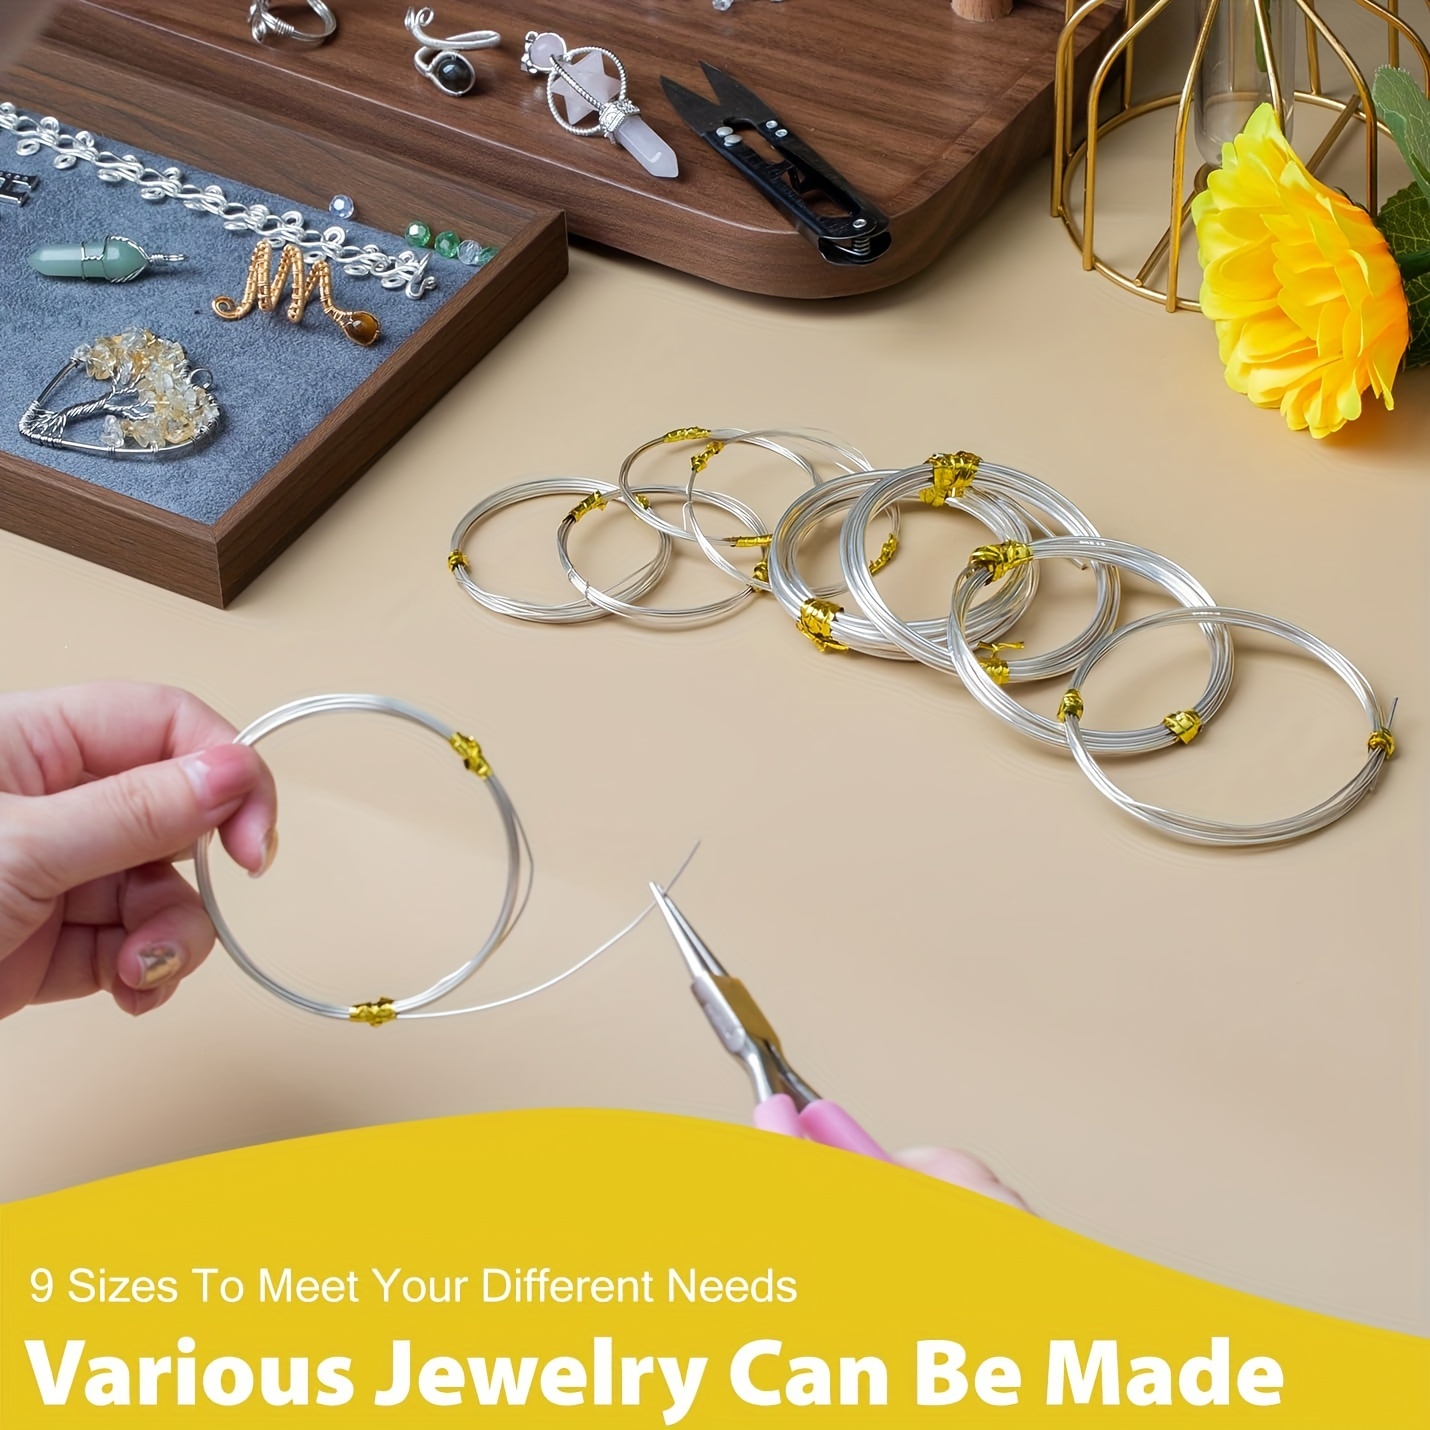 26 Gauge Round Half Hard Copper Wire: Jewelry Making Supplies, Instructions